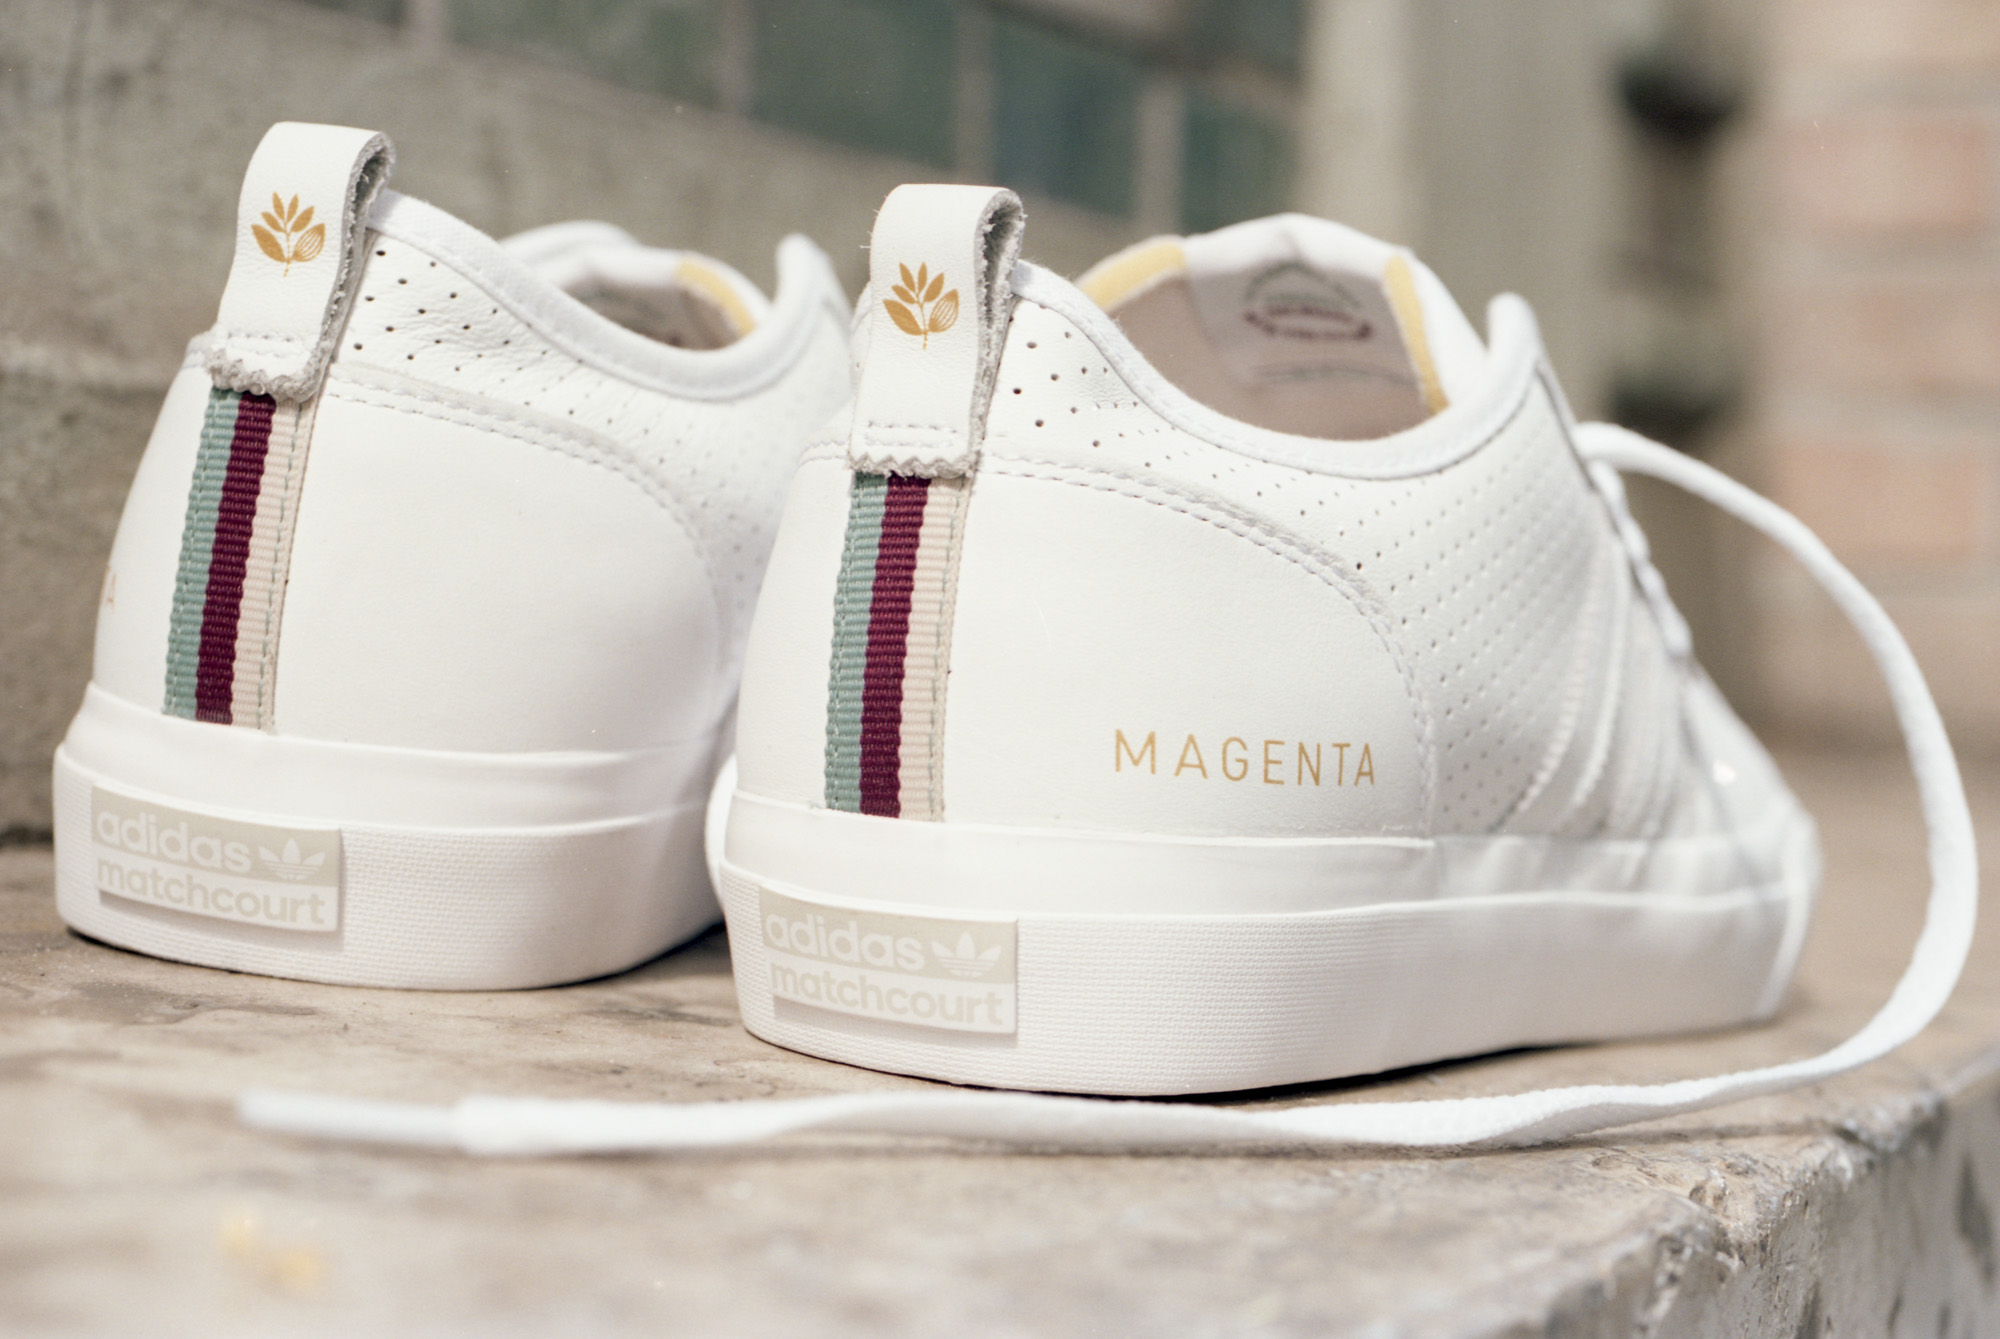 Adidas Magenta shoes back - Magenta new